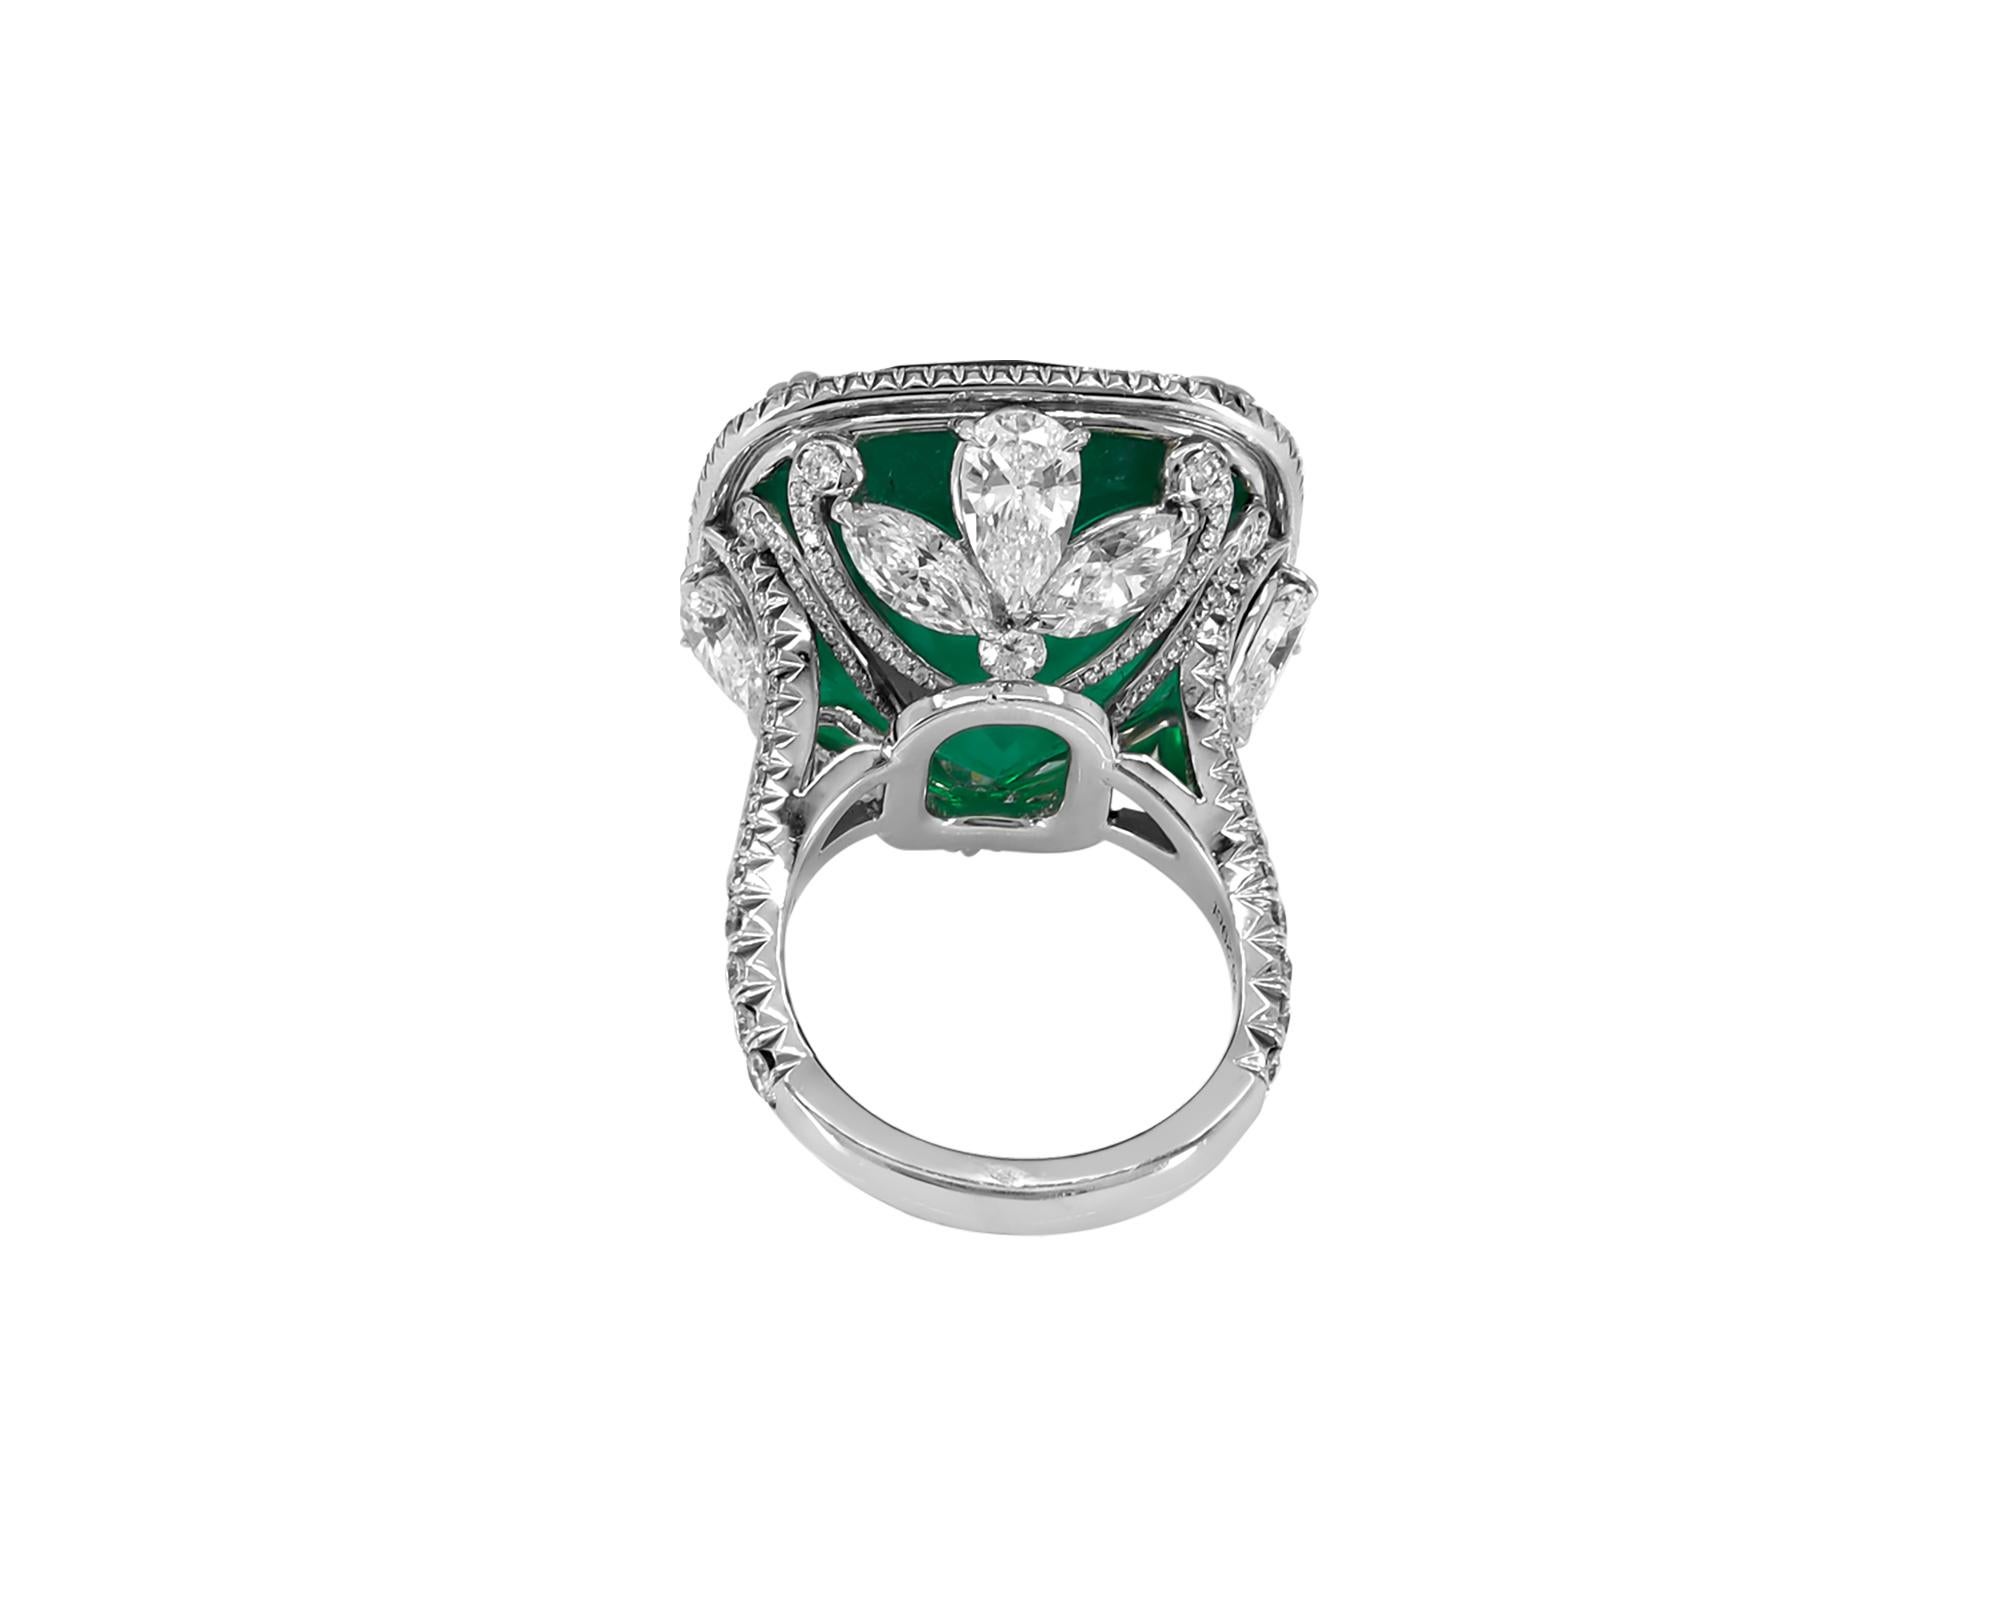 Cushion Cut 36.29 Carat Colombian Emerald Diamond Cocktail Ring